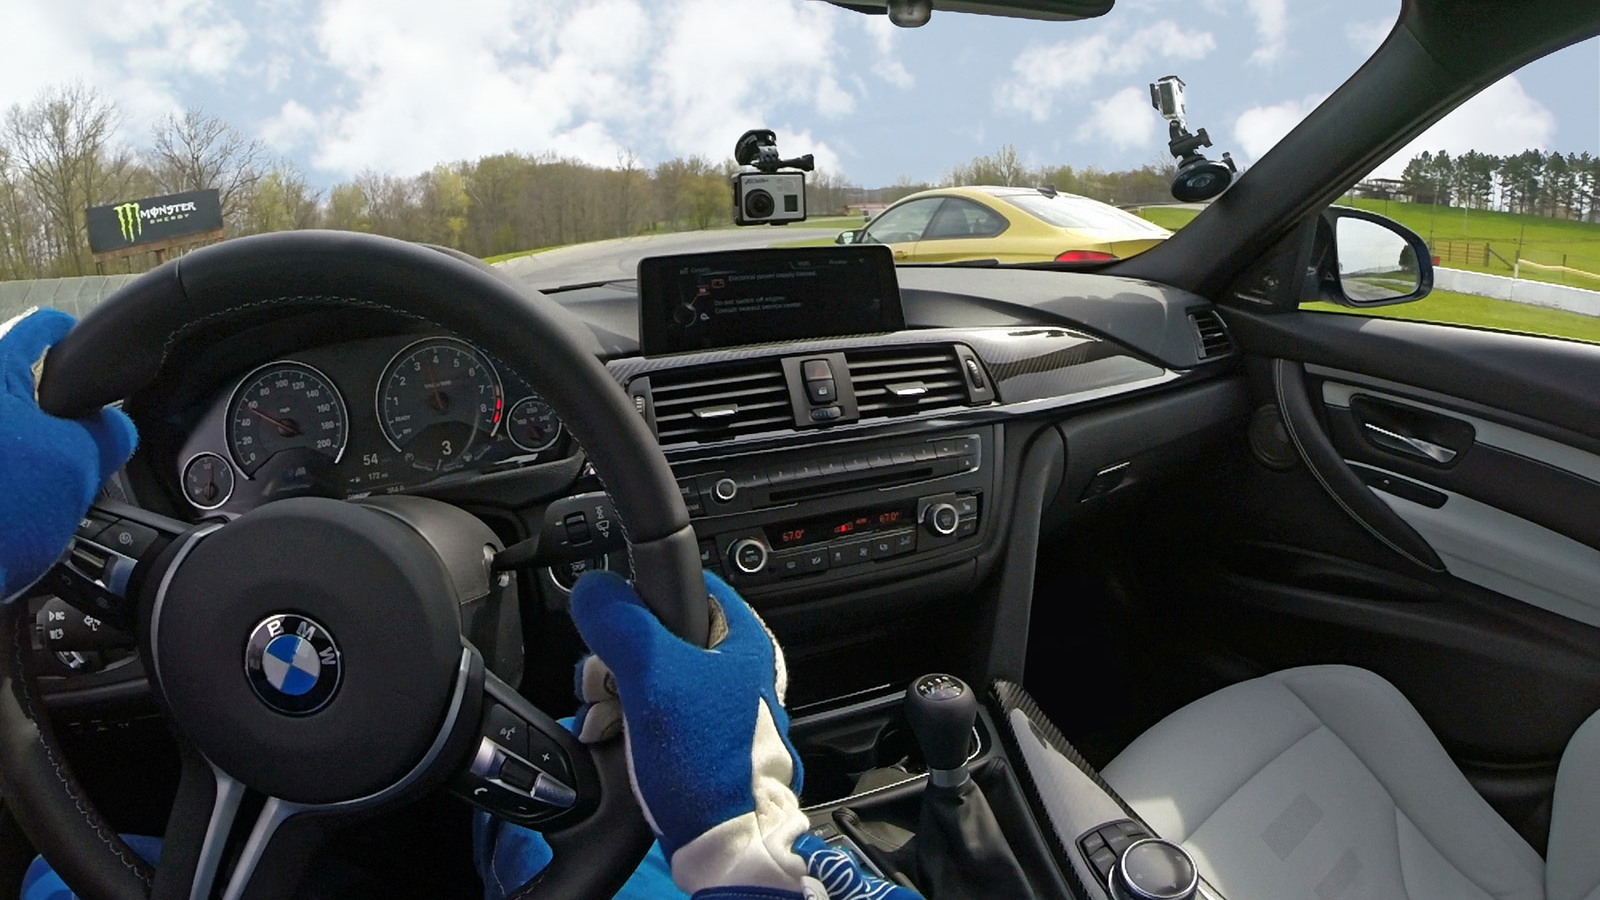 BMW GoPro integration